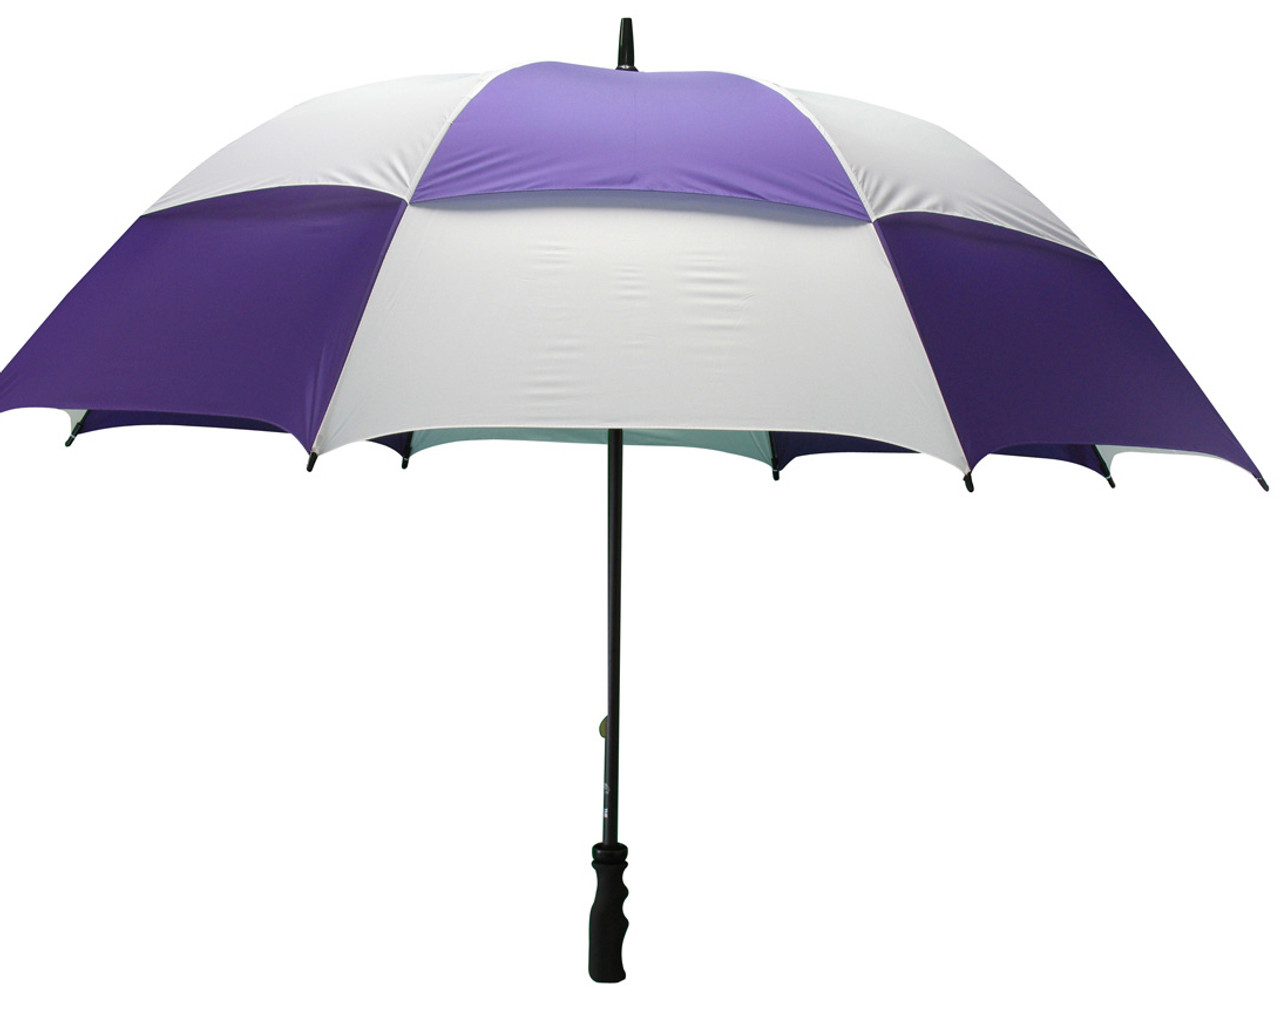 MVP-PL Umbrella purple and white